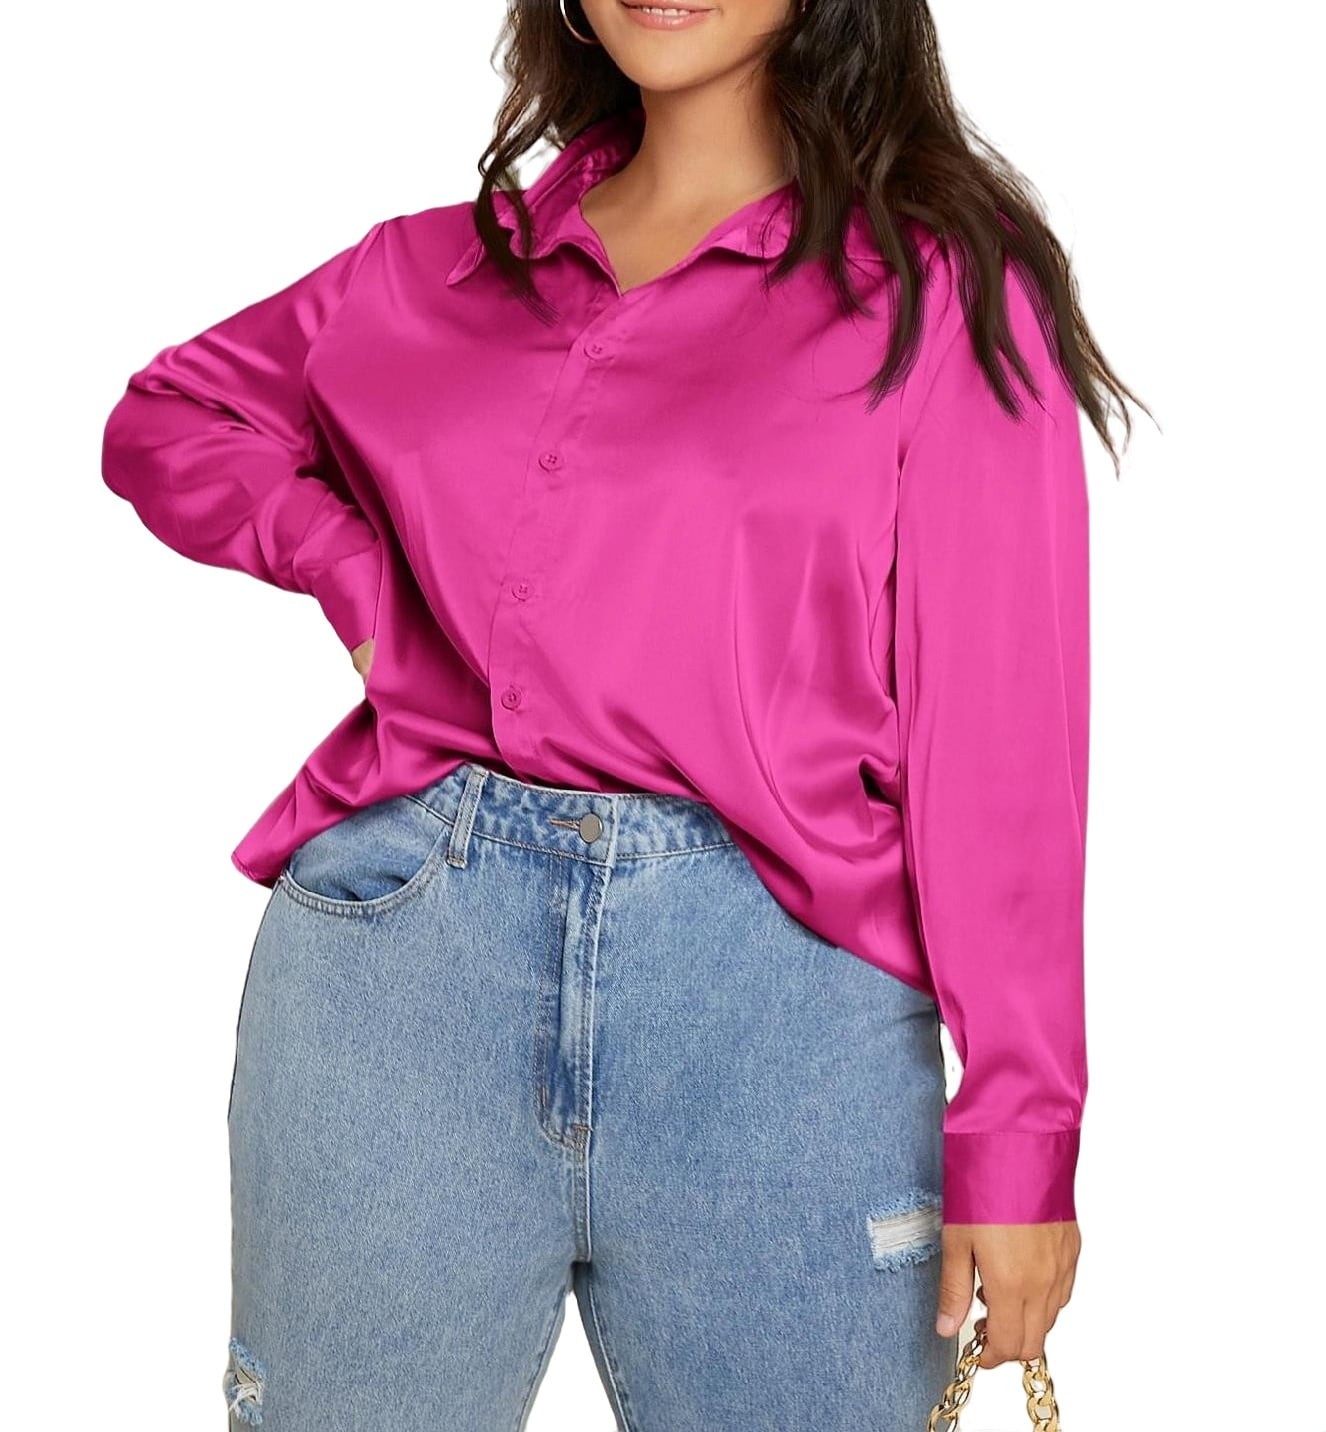 anklageren Siege Styrke Elegant Solid Collar Shirt Long Sleeve Hot Pink Plus Size Blouses (Women's)  - Walmart.com